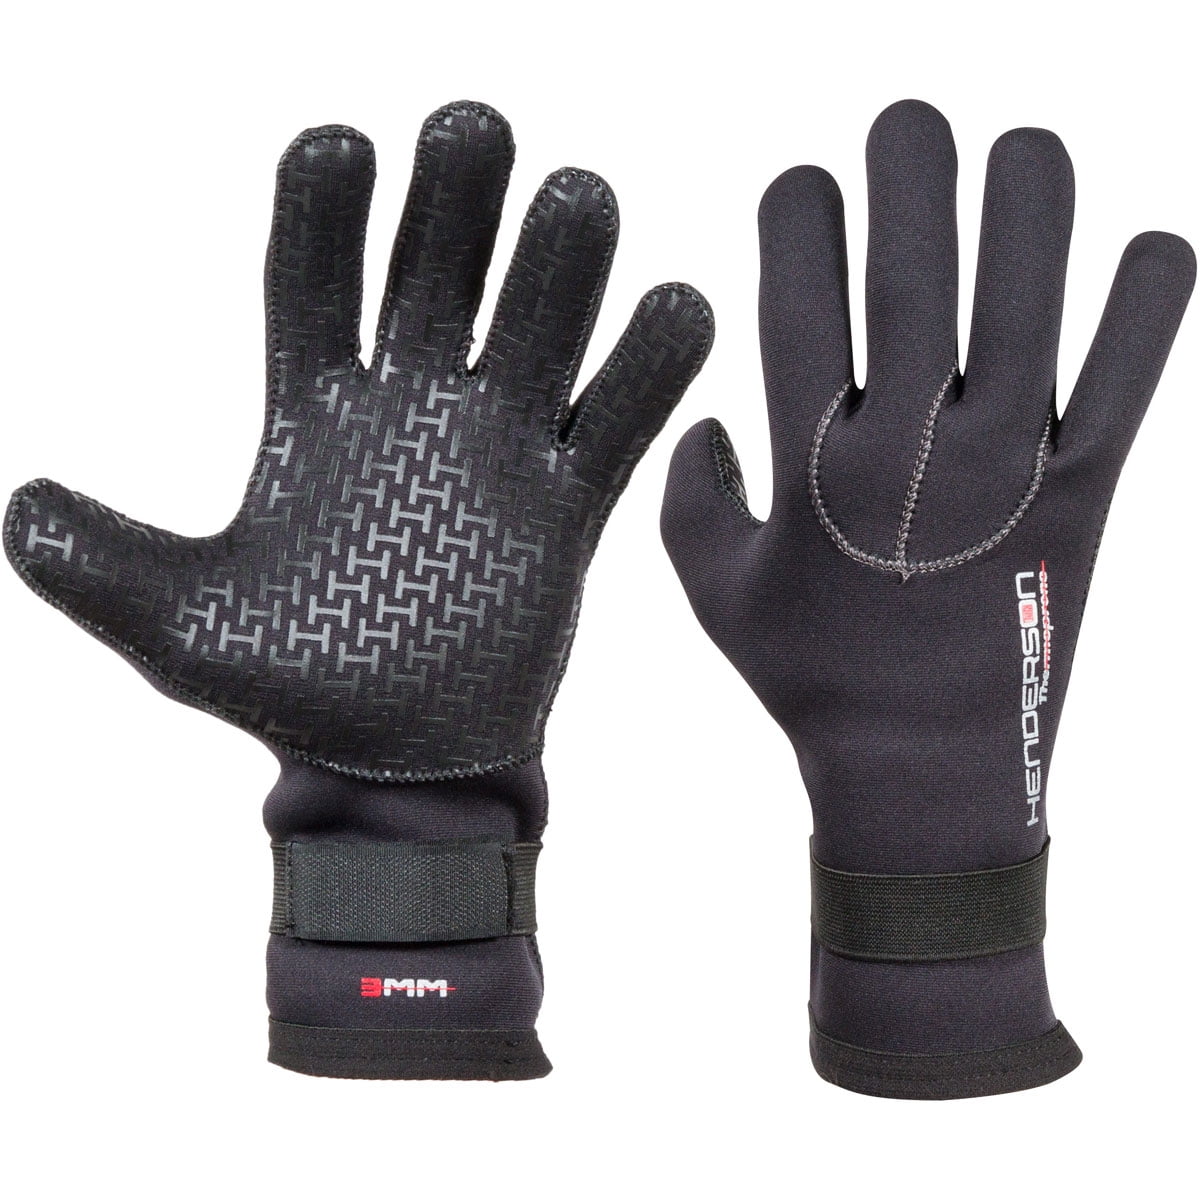 Henderson Thermoprene Neoprene Gloves with wrist strap 